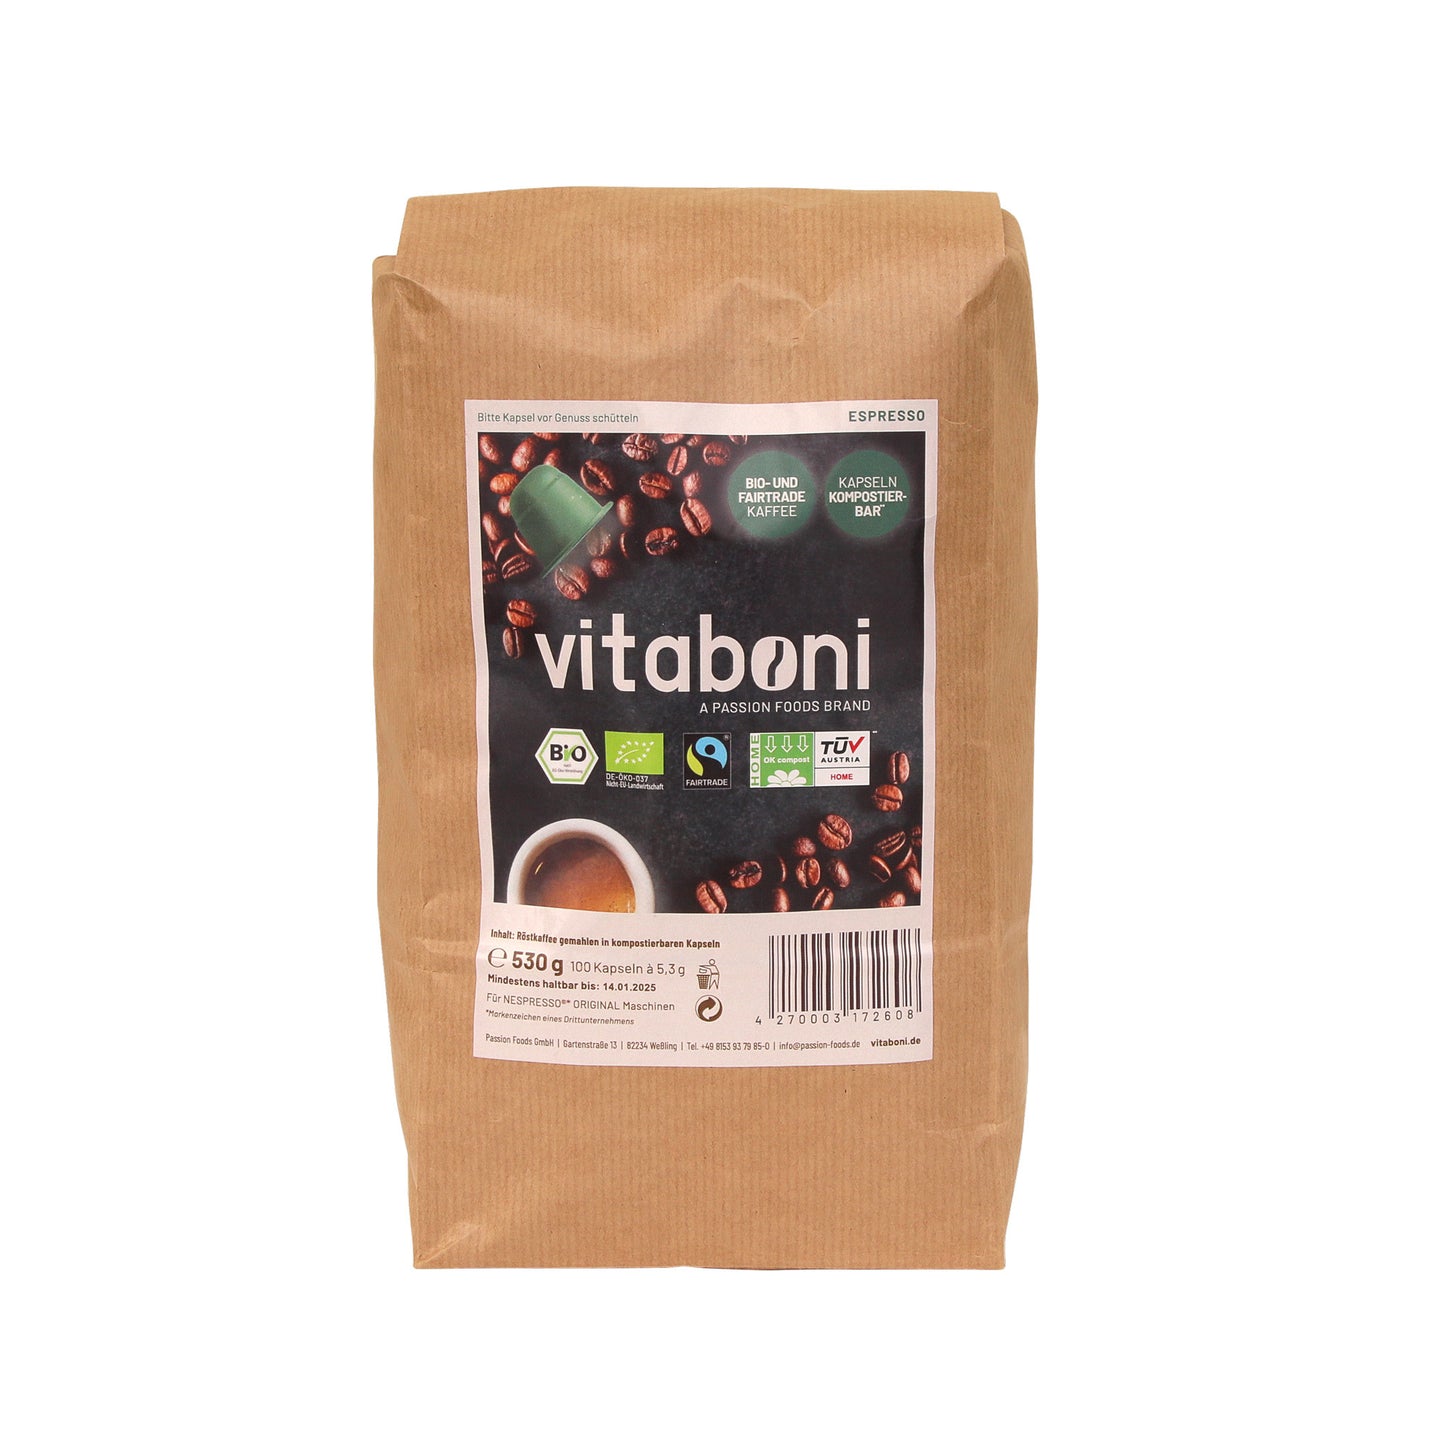 Vitaboni ® Bio Fairtrade Biodegradable Coffee Capsules | biologisch abbaubare Kaffeekapseln